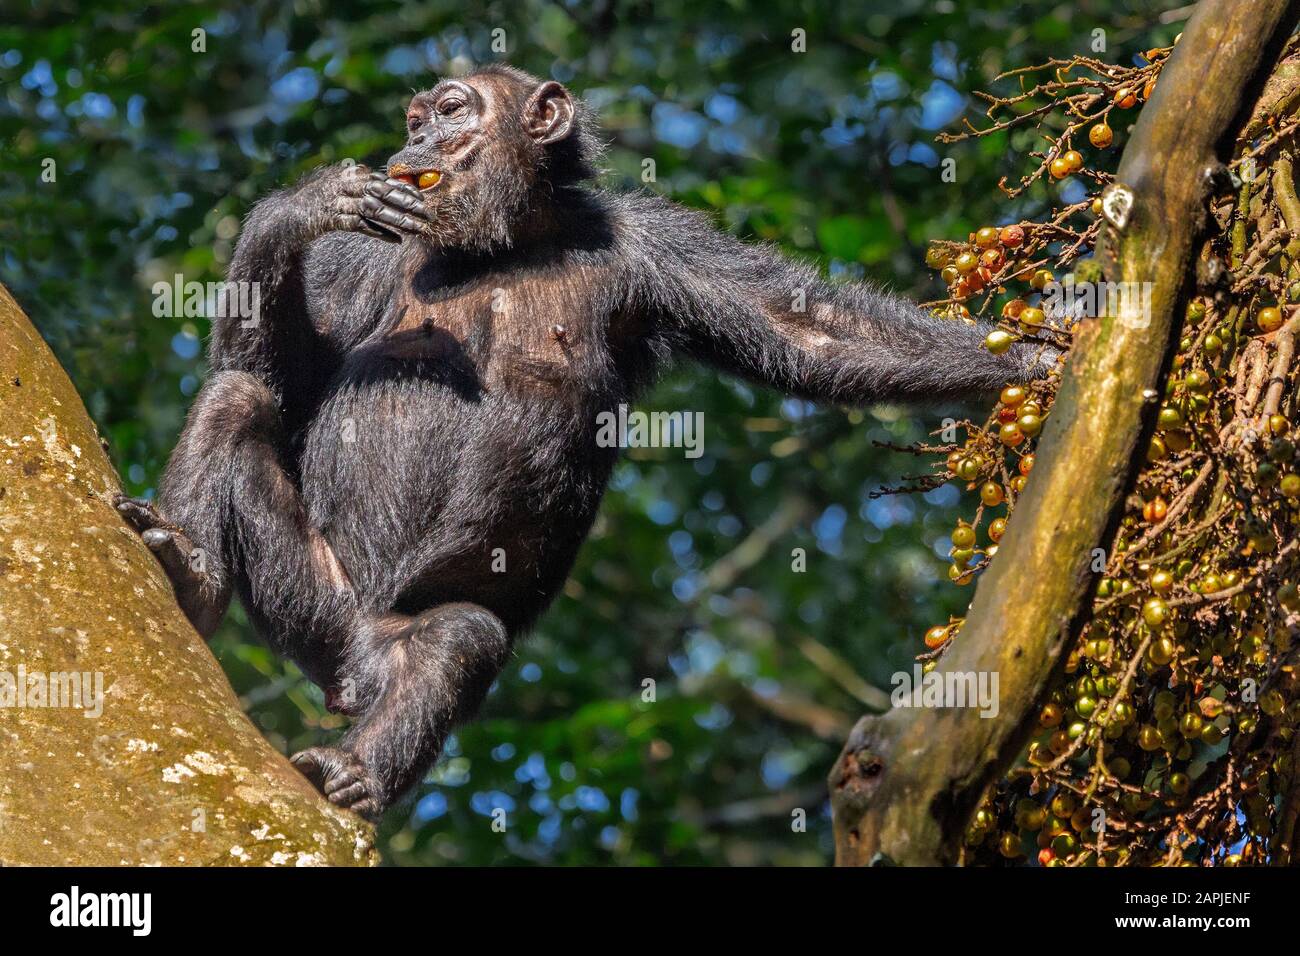 Chimpanzee eating berries in Kibale rainforest, Uganda, Africa Stock Photo